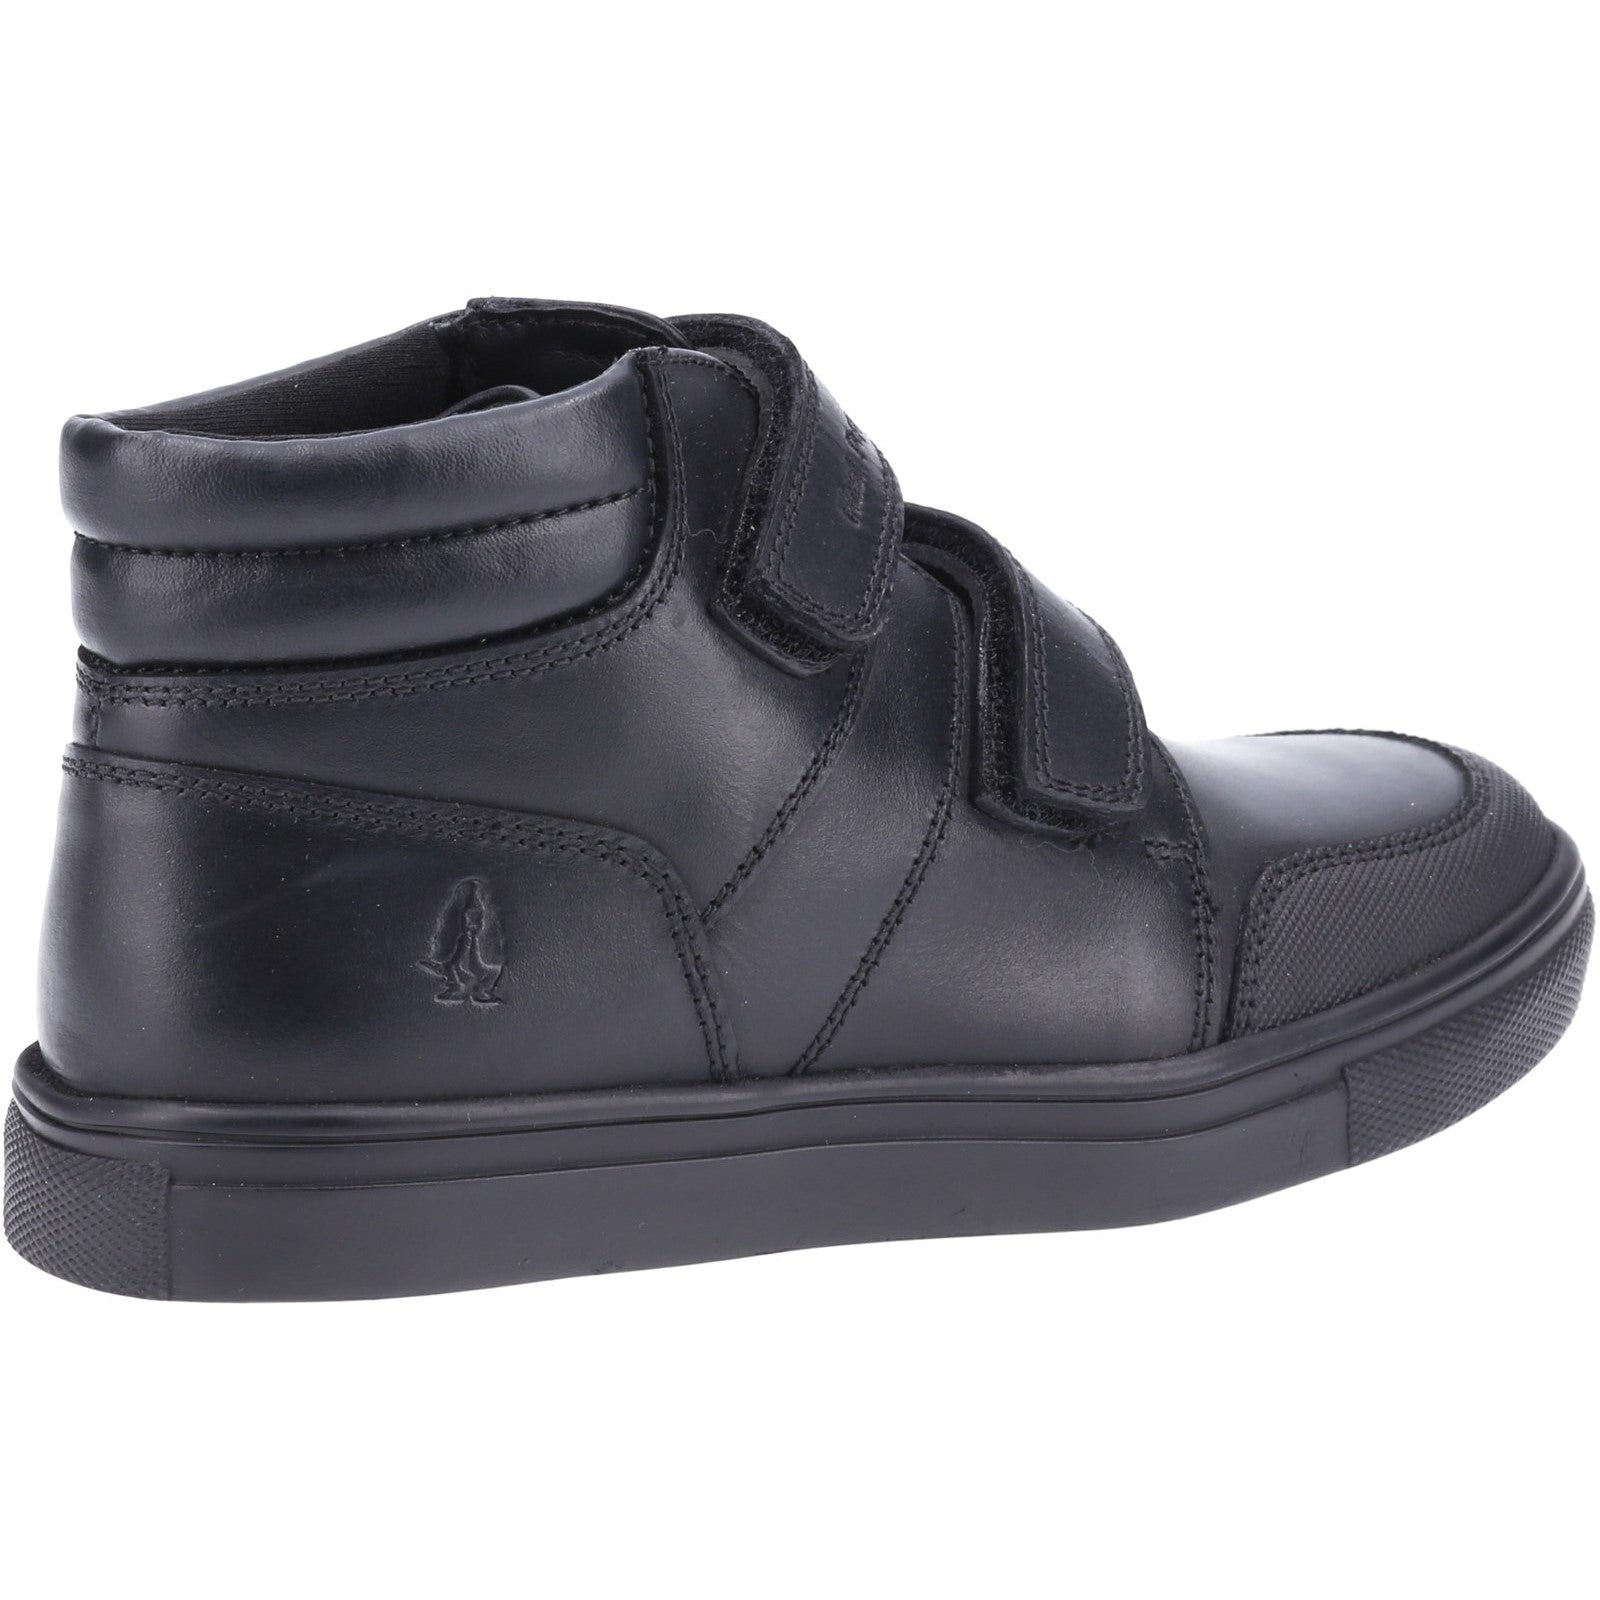 Hush Puppies Boys Seth Leather School Shoes - Black